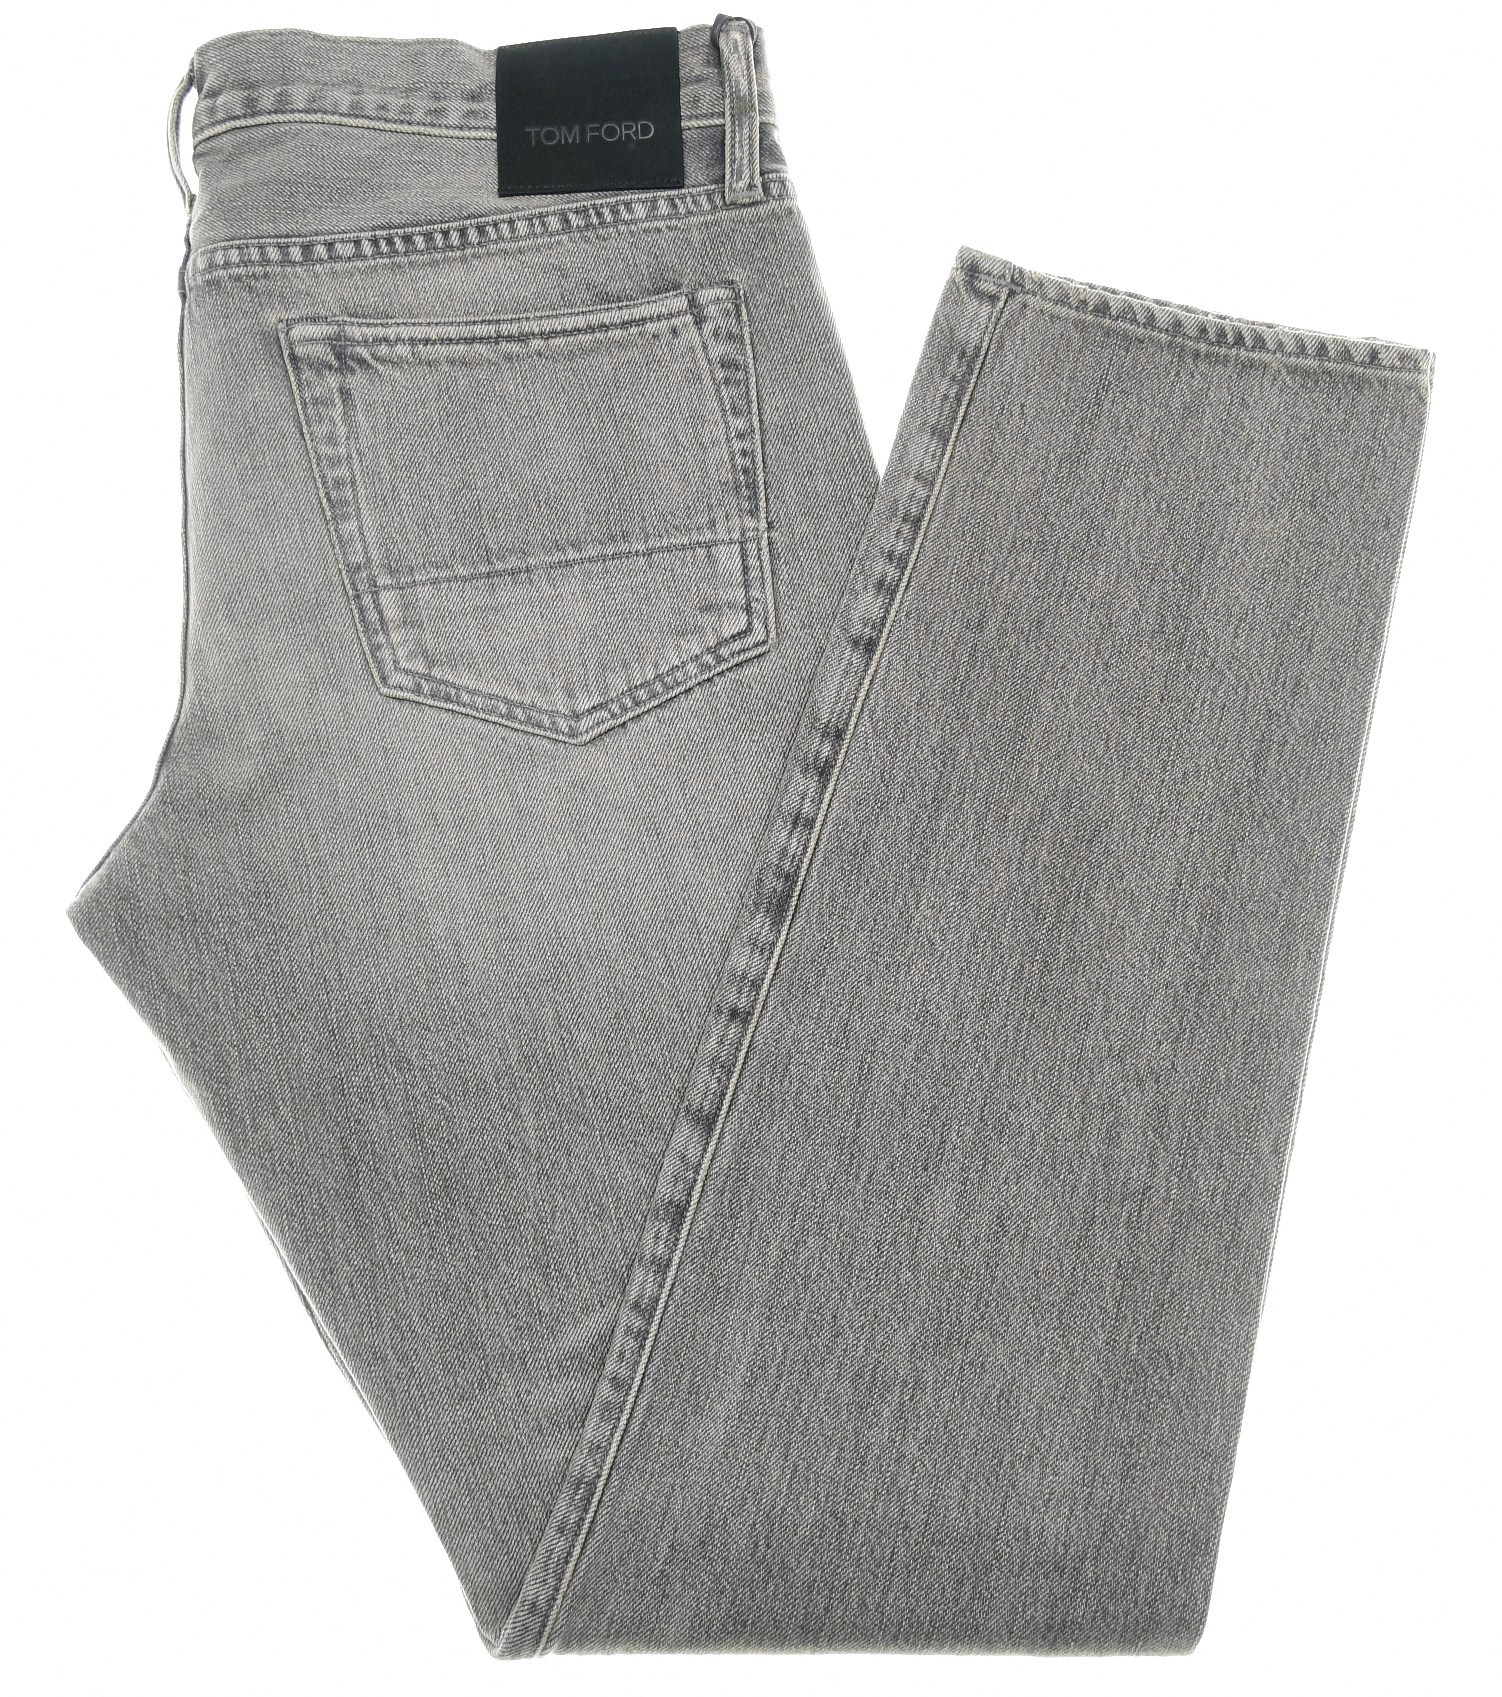 Tom Ford Jeans Slim Fit Selvedge Gray